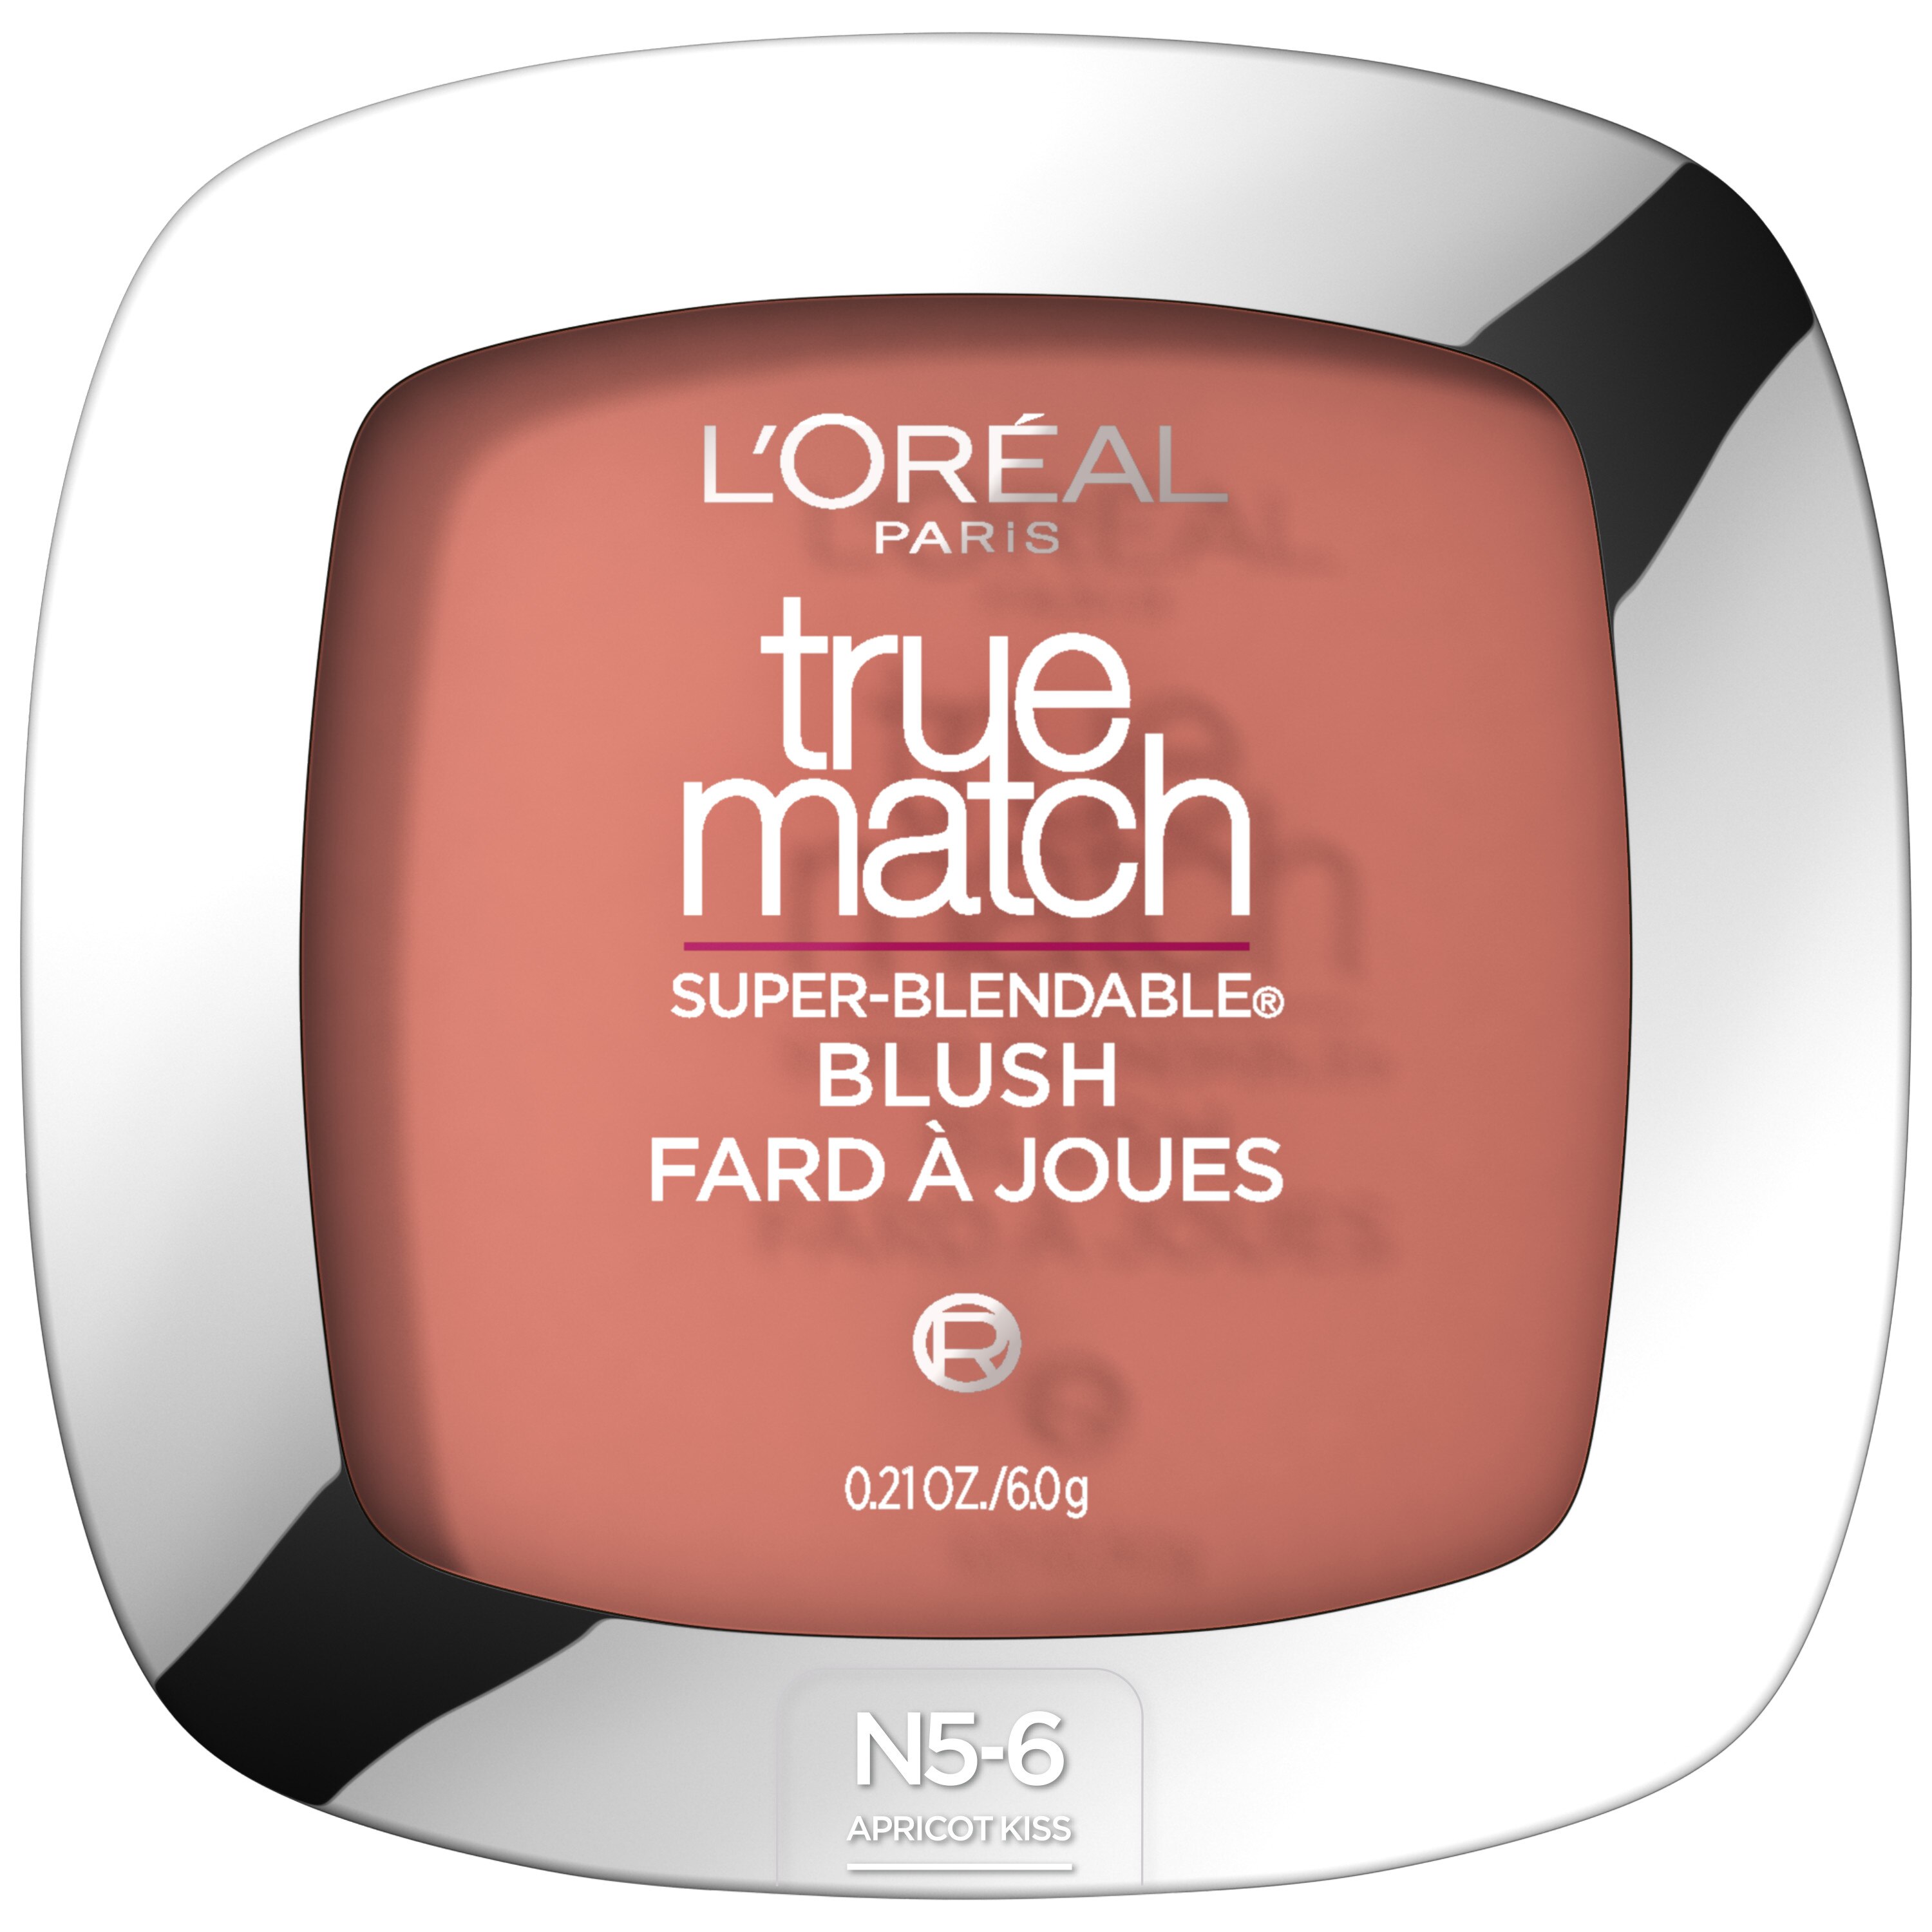 L'Oreal Paris True Match Super-Blendable Blush, N5-6 Apricot Kiss , CVS